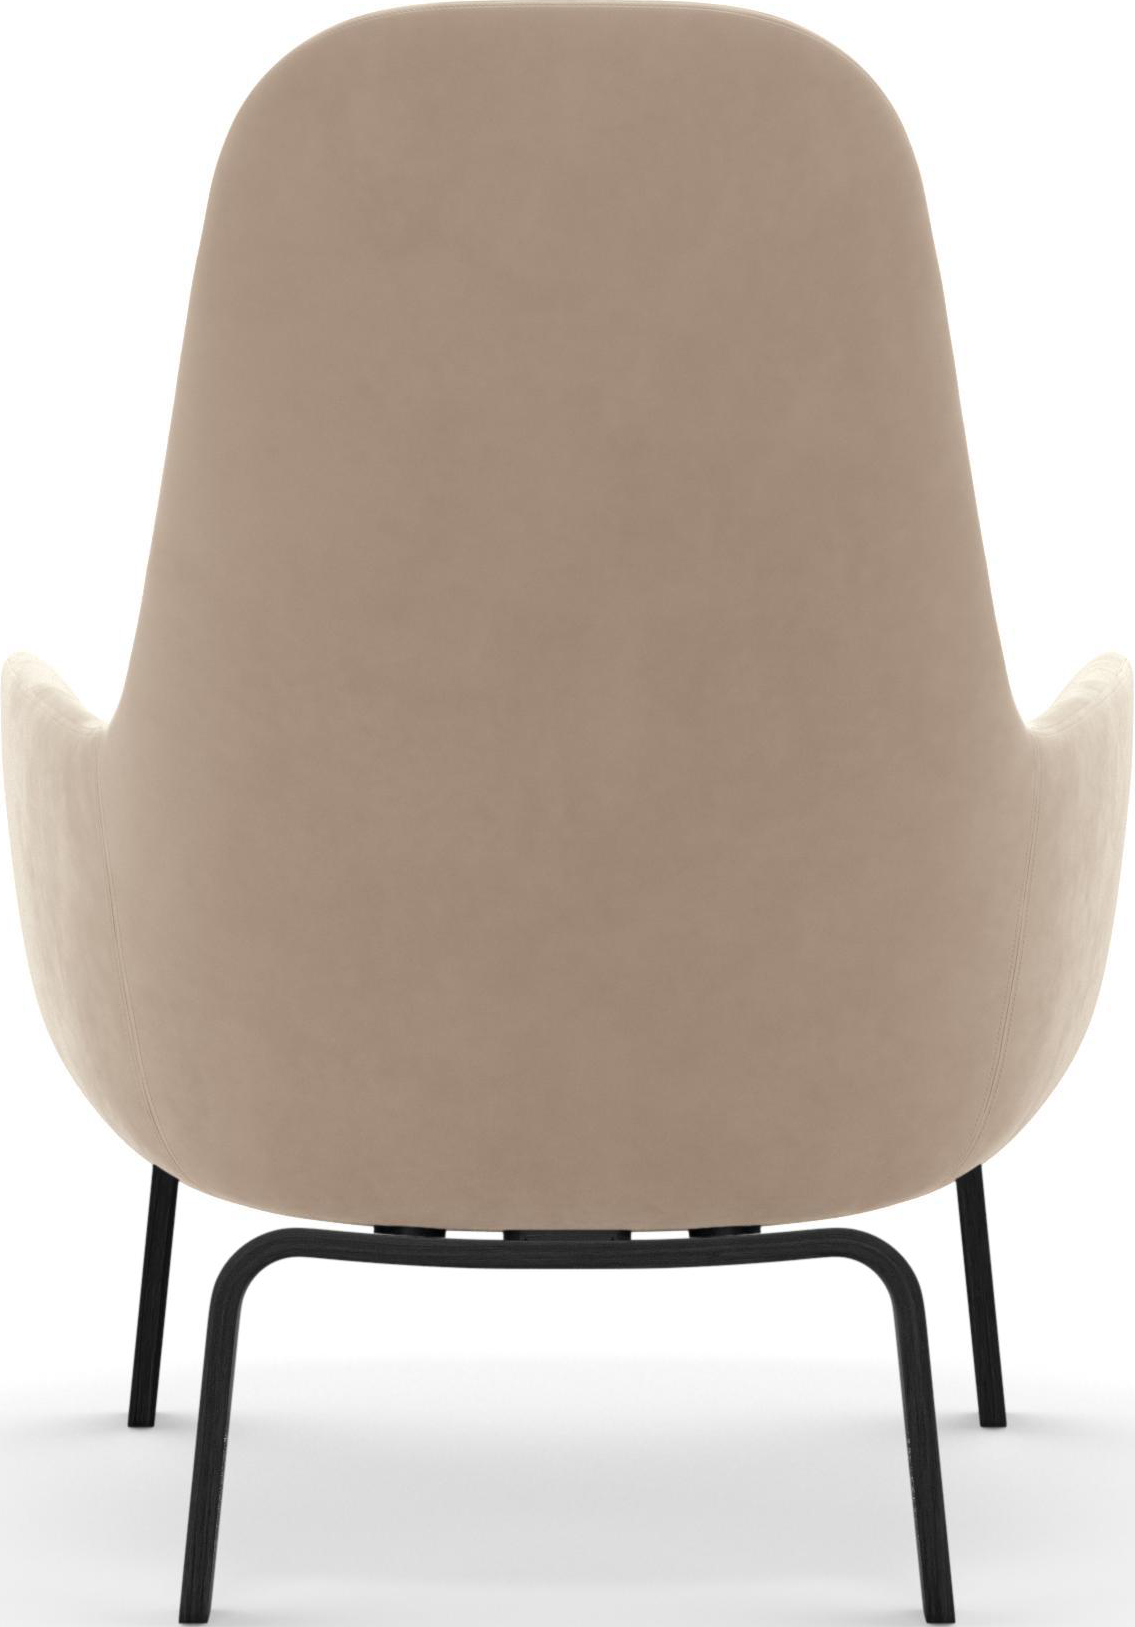 Era Lounge Sessel hoch - KAQTU Design